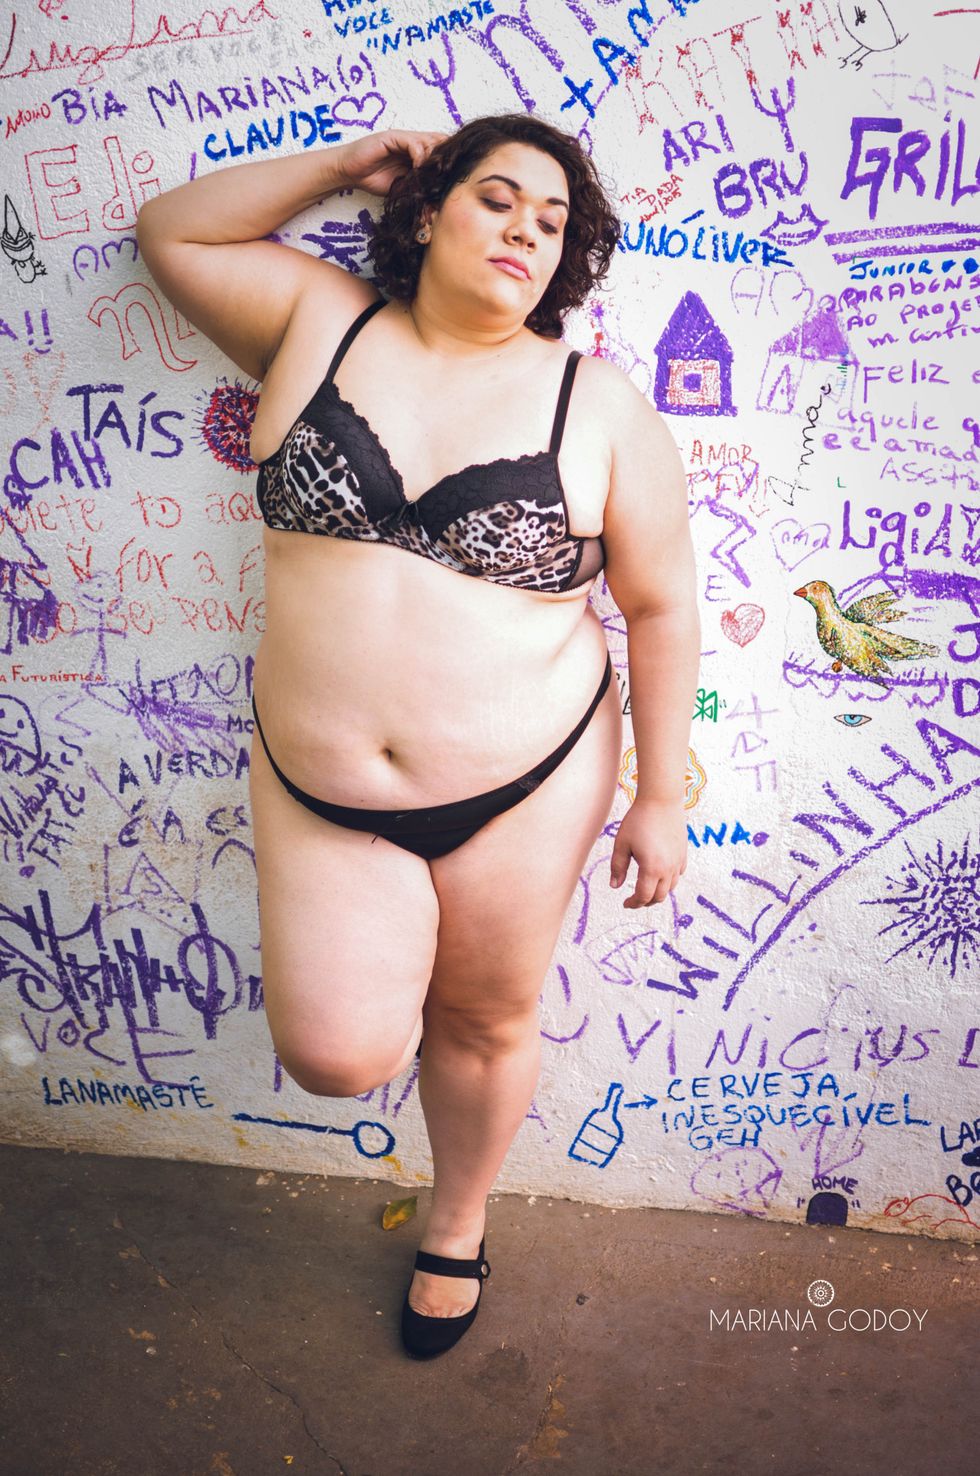 Photo series of beautiful 'fat' women